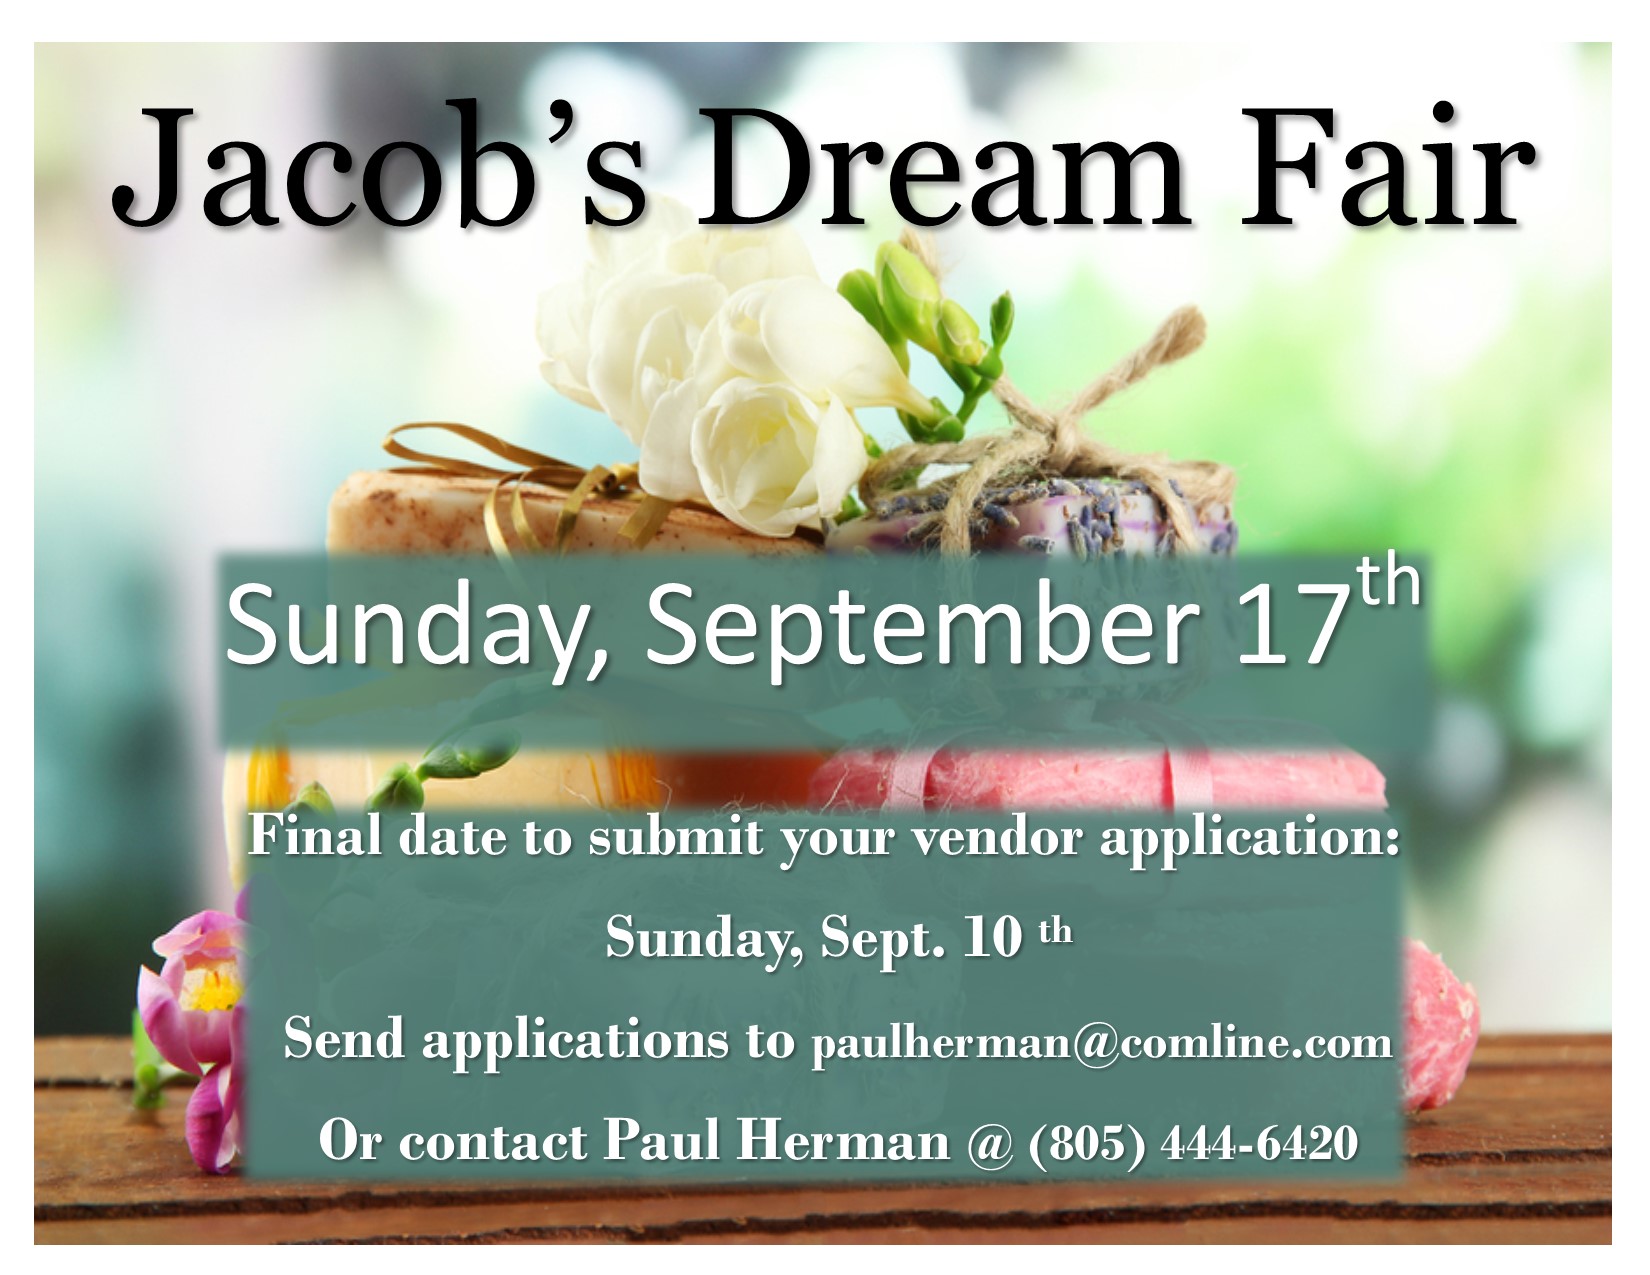 Jacob’s Dream Fair